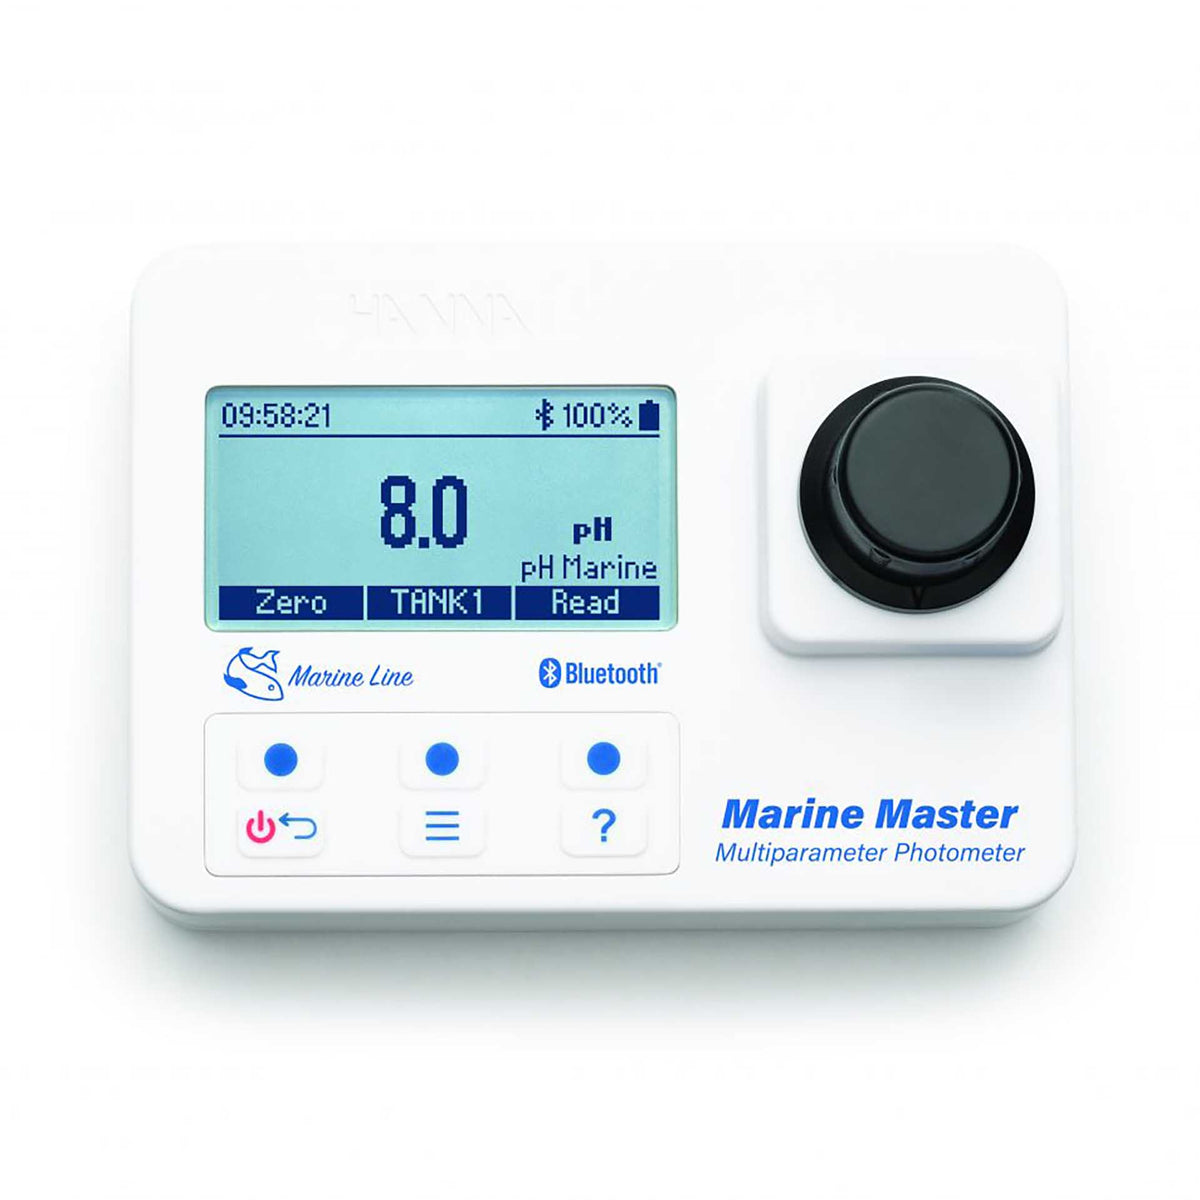 Hanna Master Waterproof Wireless Multiparameter Photometer - HI97115 NO CARRY CASE